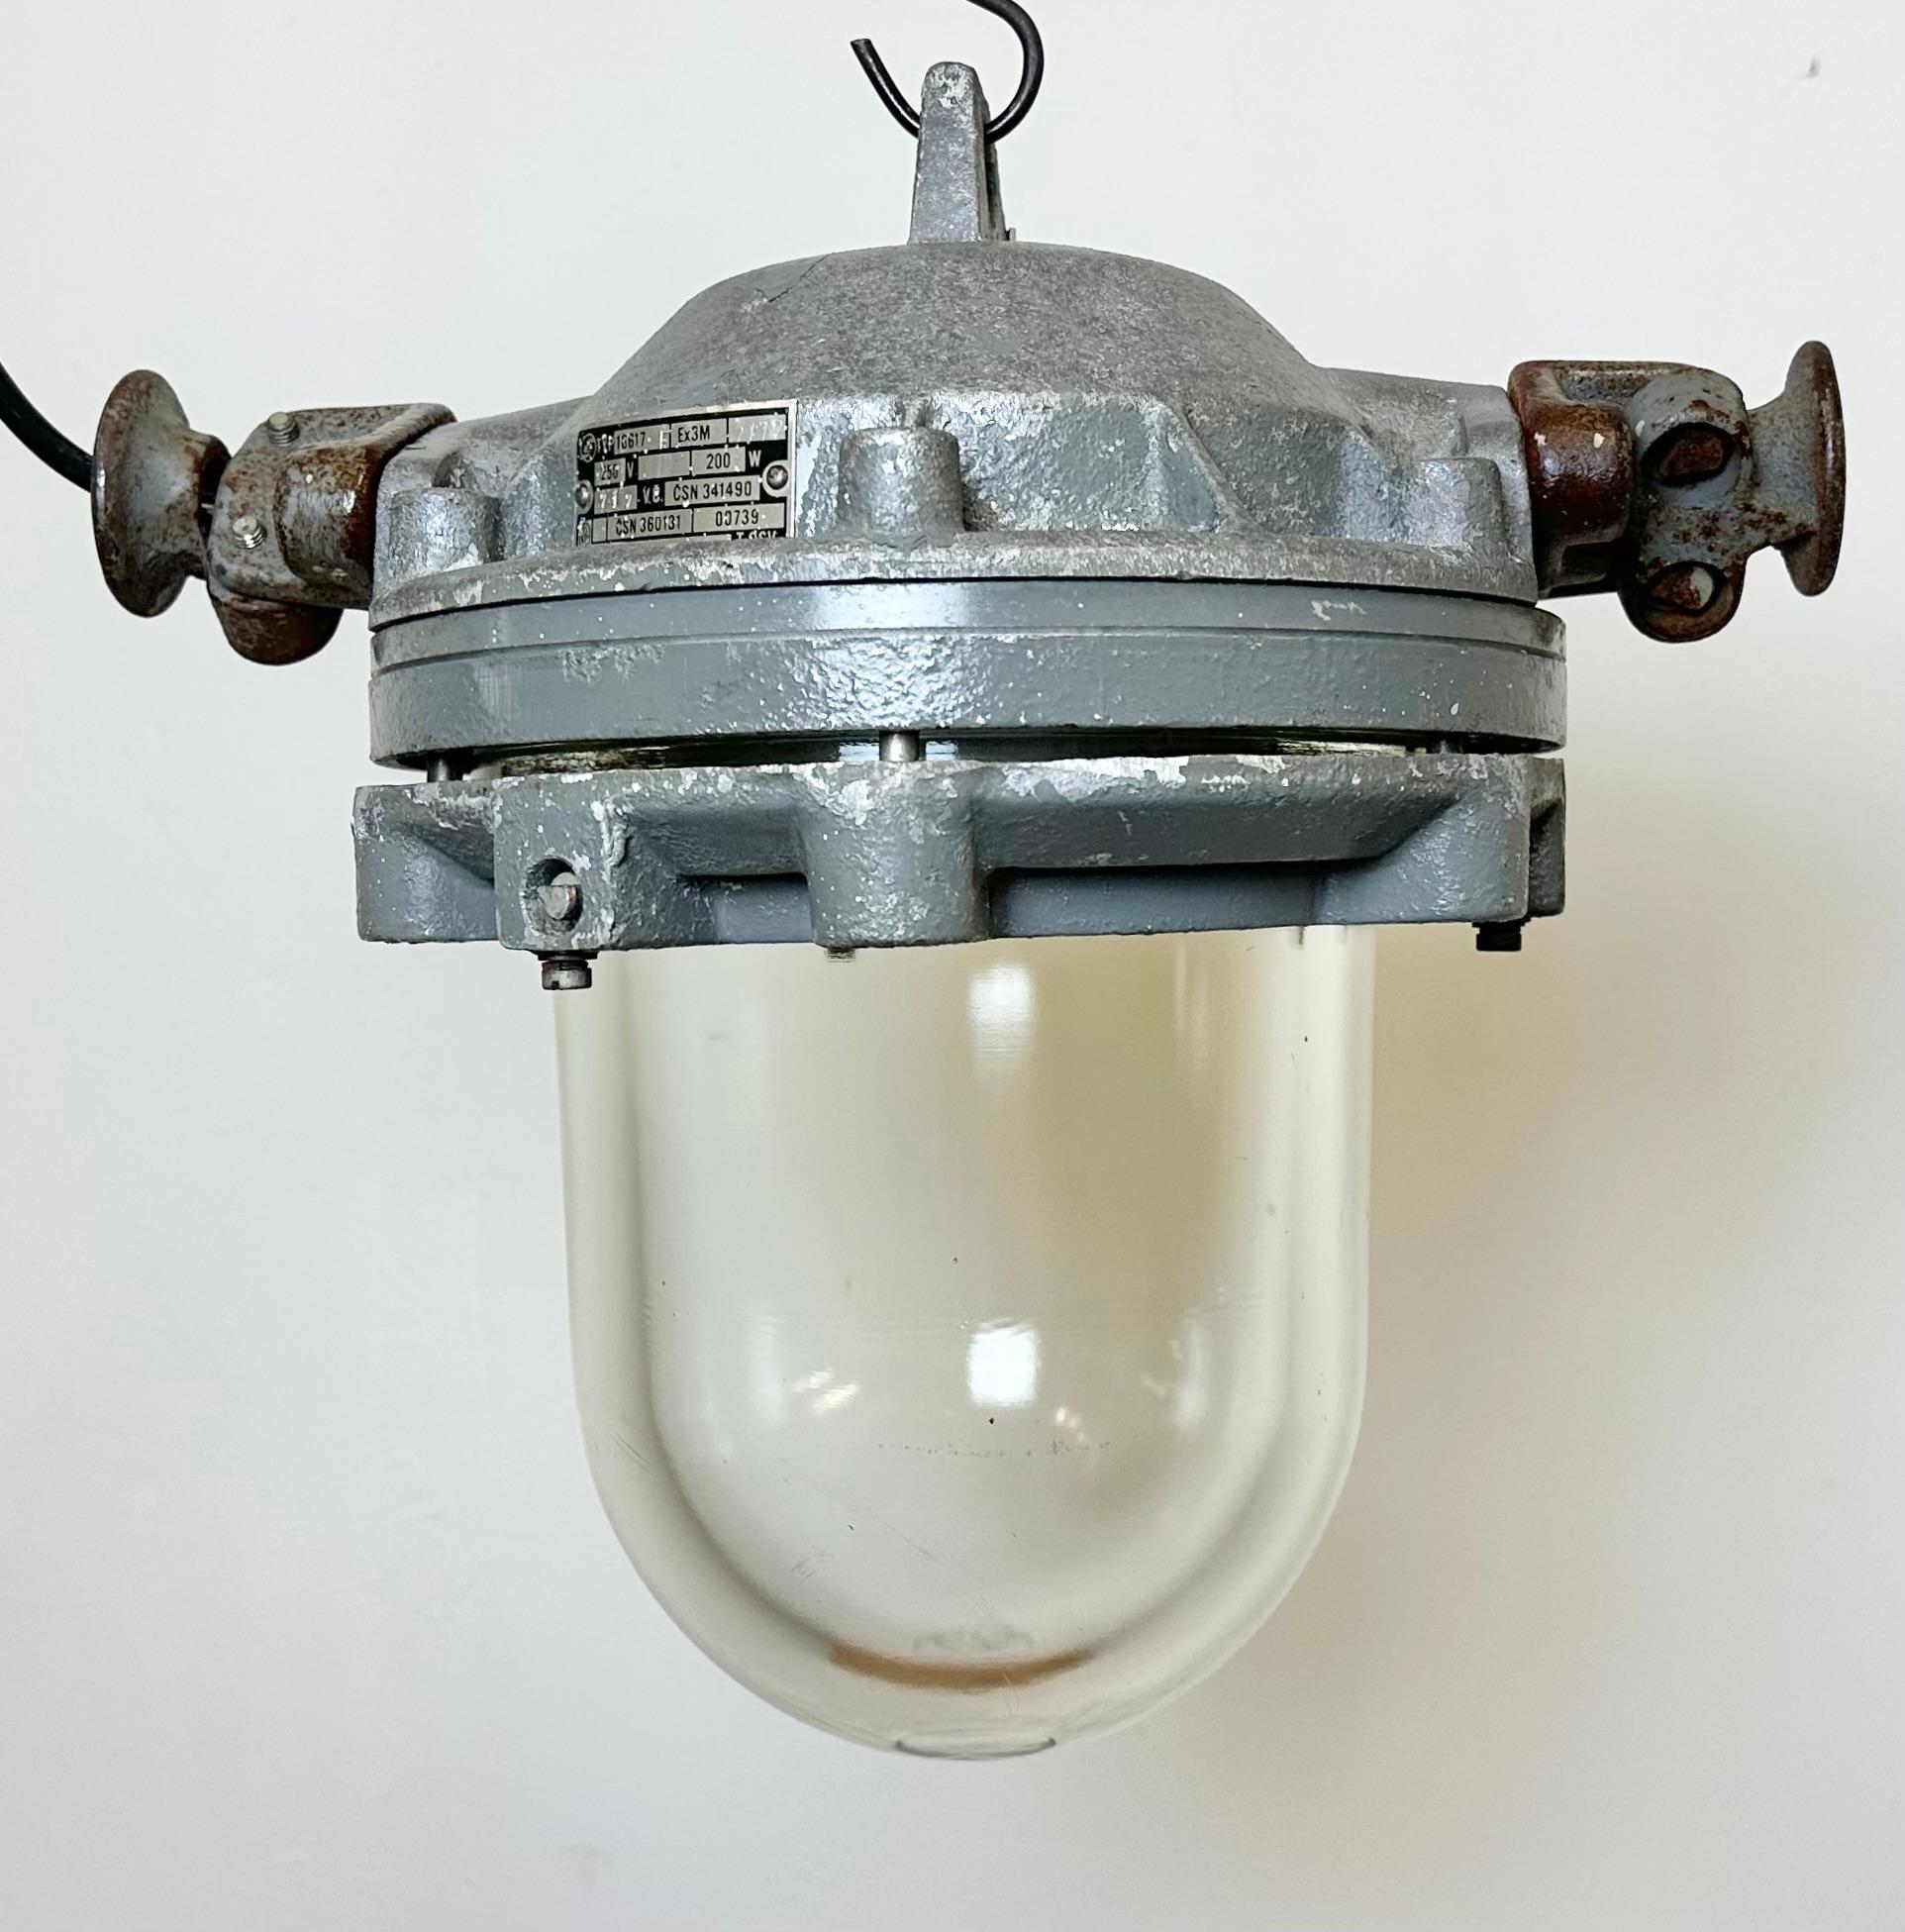 Dunkelgraue Explosion Proof-Lampe aus Aluminiumguss, 1970er Jahre (Industriell) im Angebot